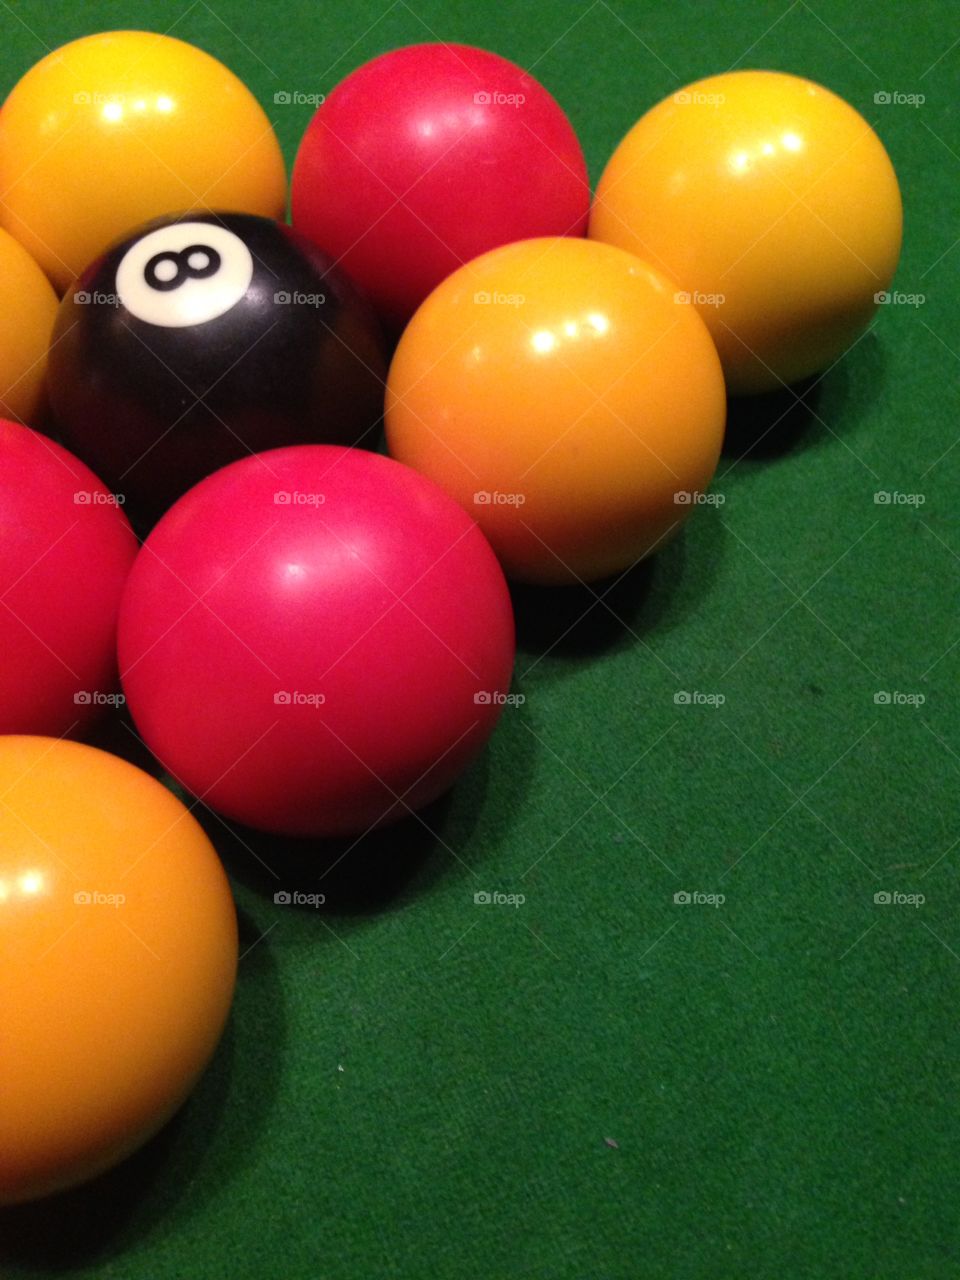 Pool table green felt red yellow balls 